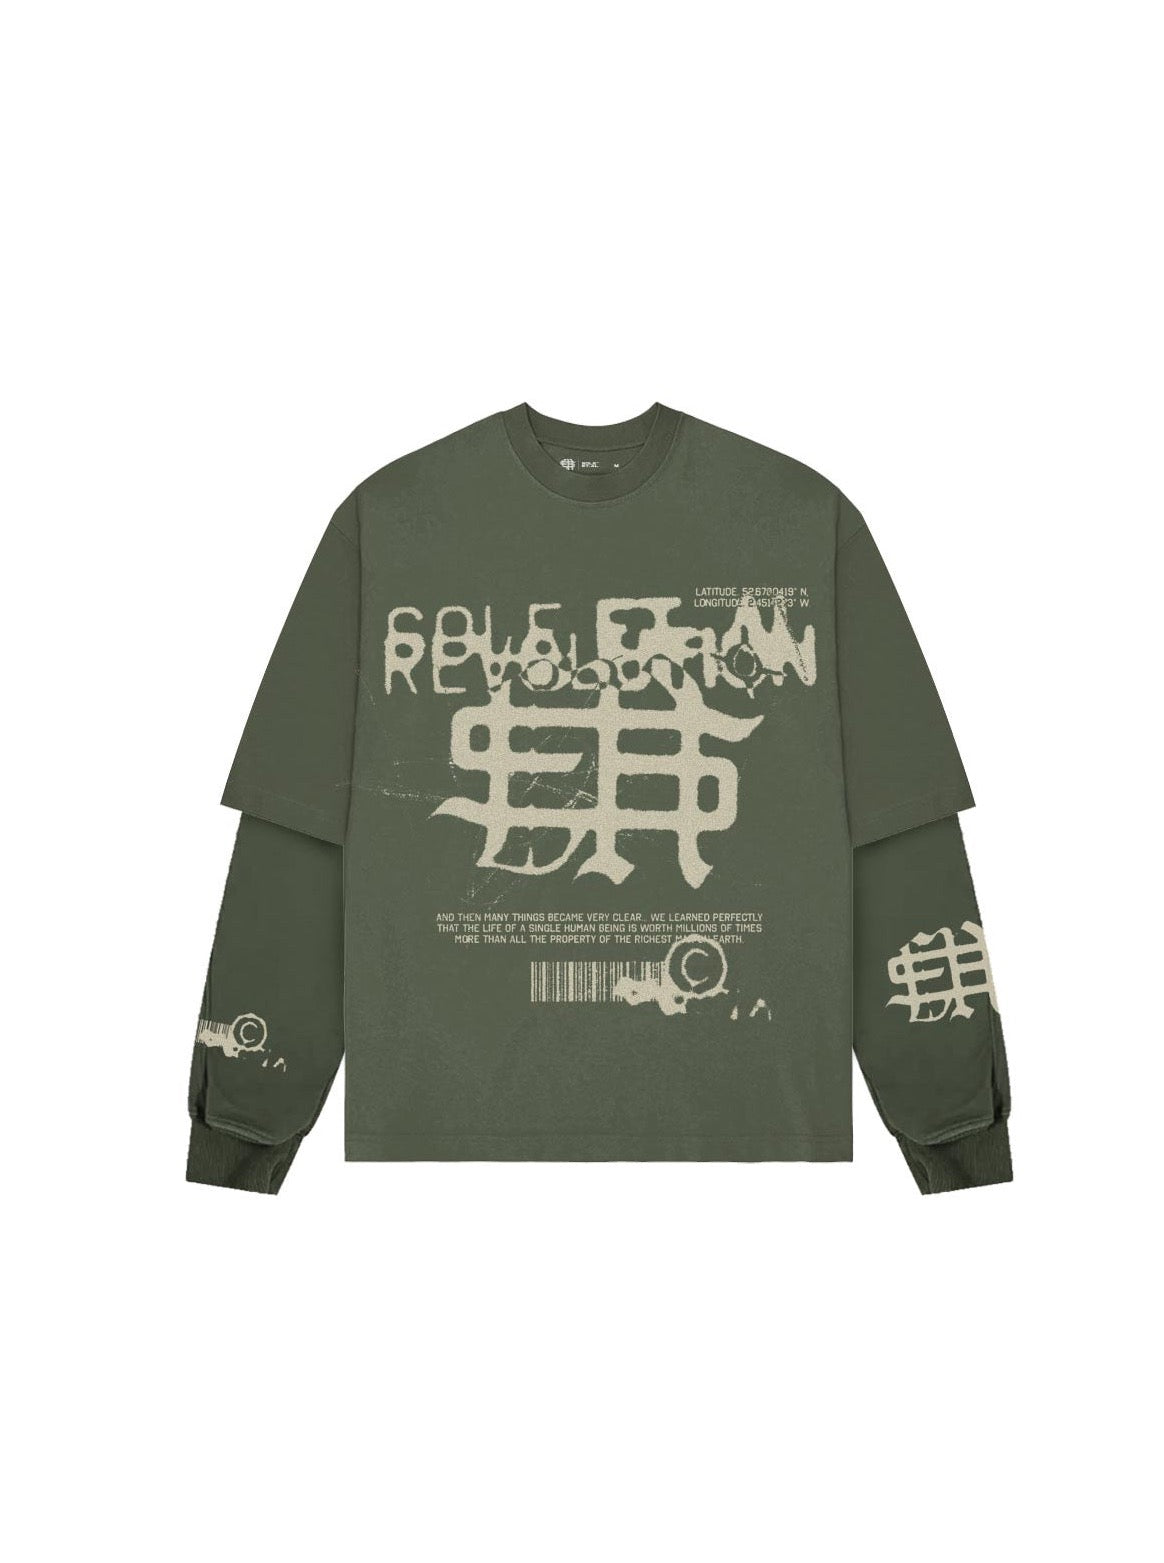 Sole et. Al Revølutiøn Camiseta manga larga doble capa : Verde militar / Arena